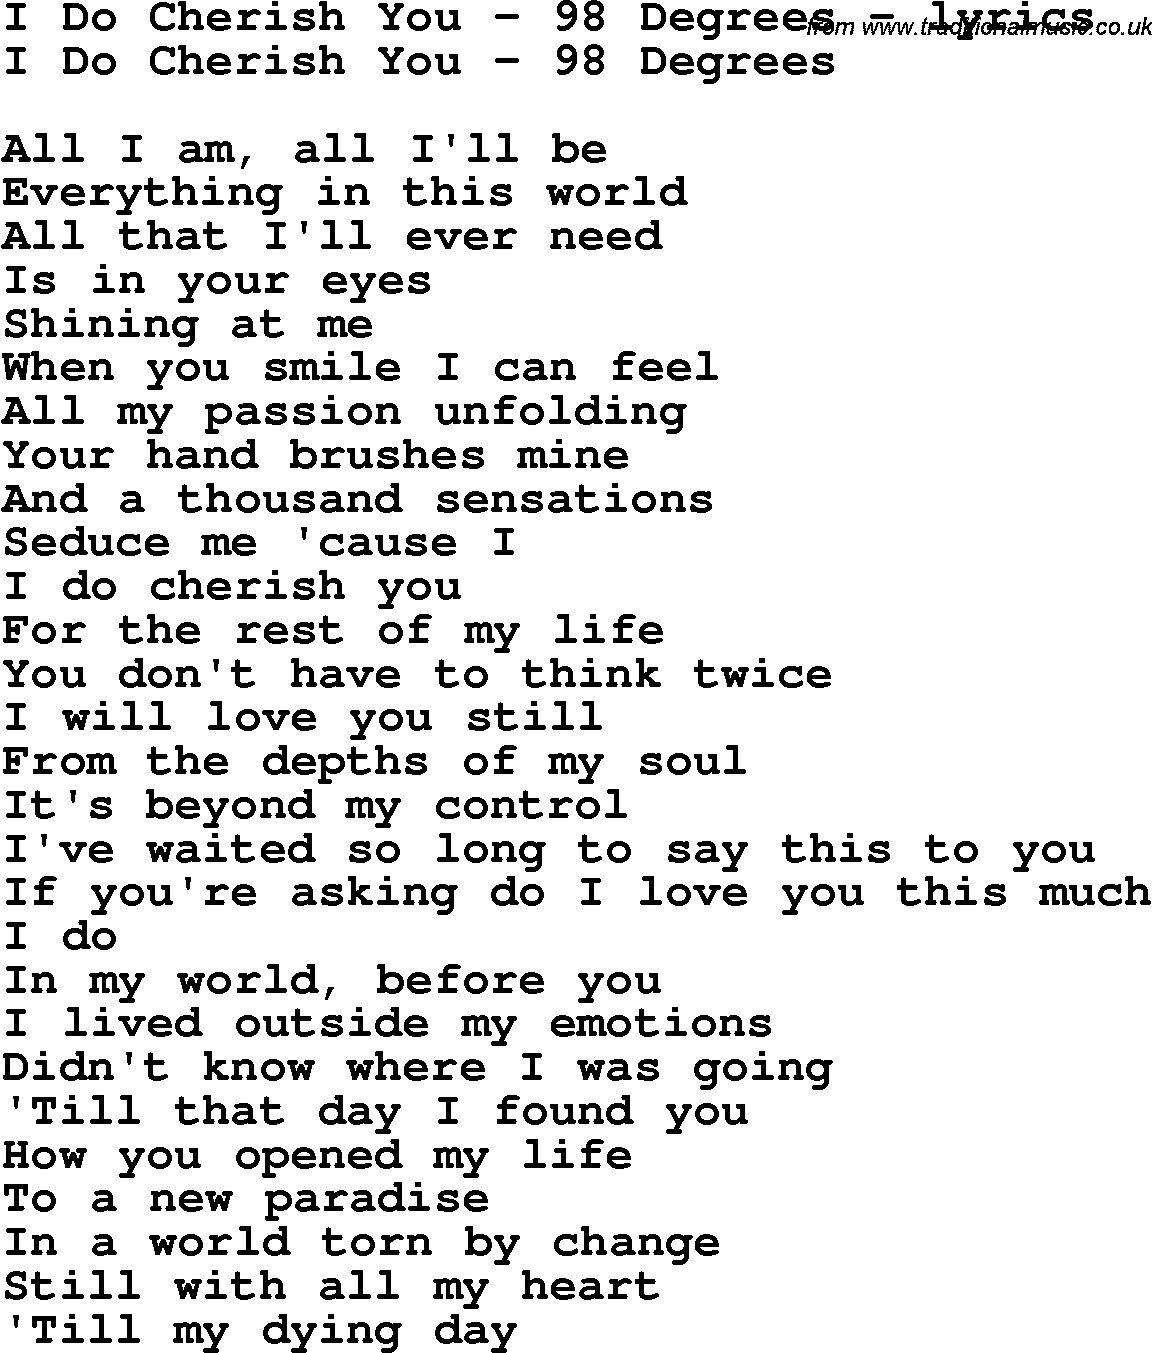 Love Song Lyrics for: I Do Cherish You - 98 Degrees